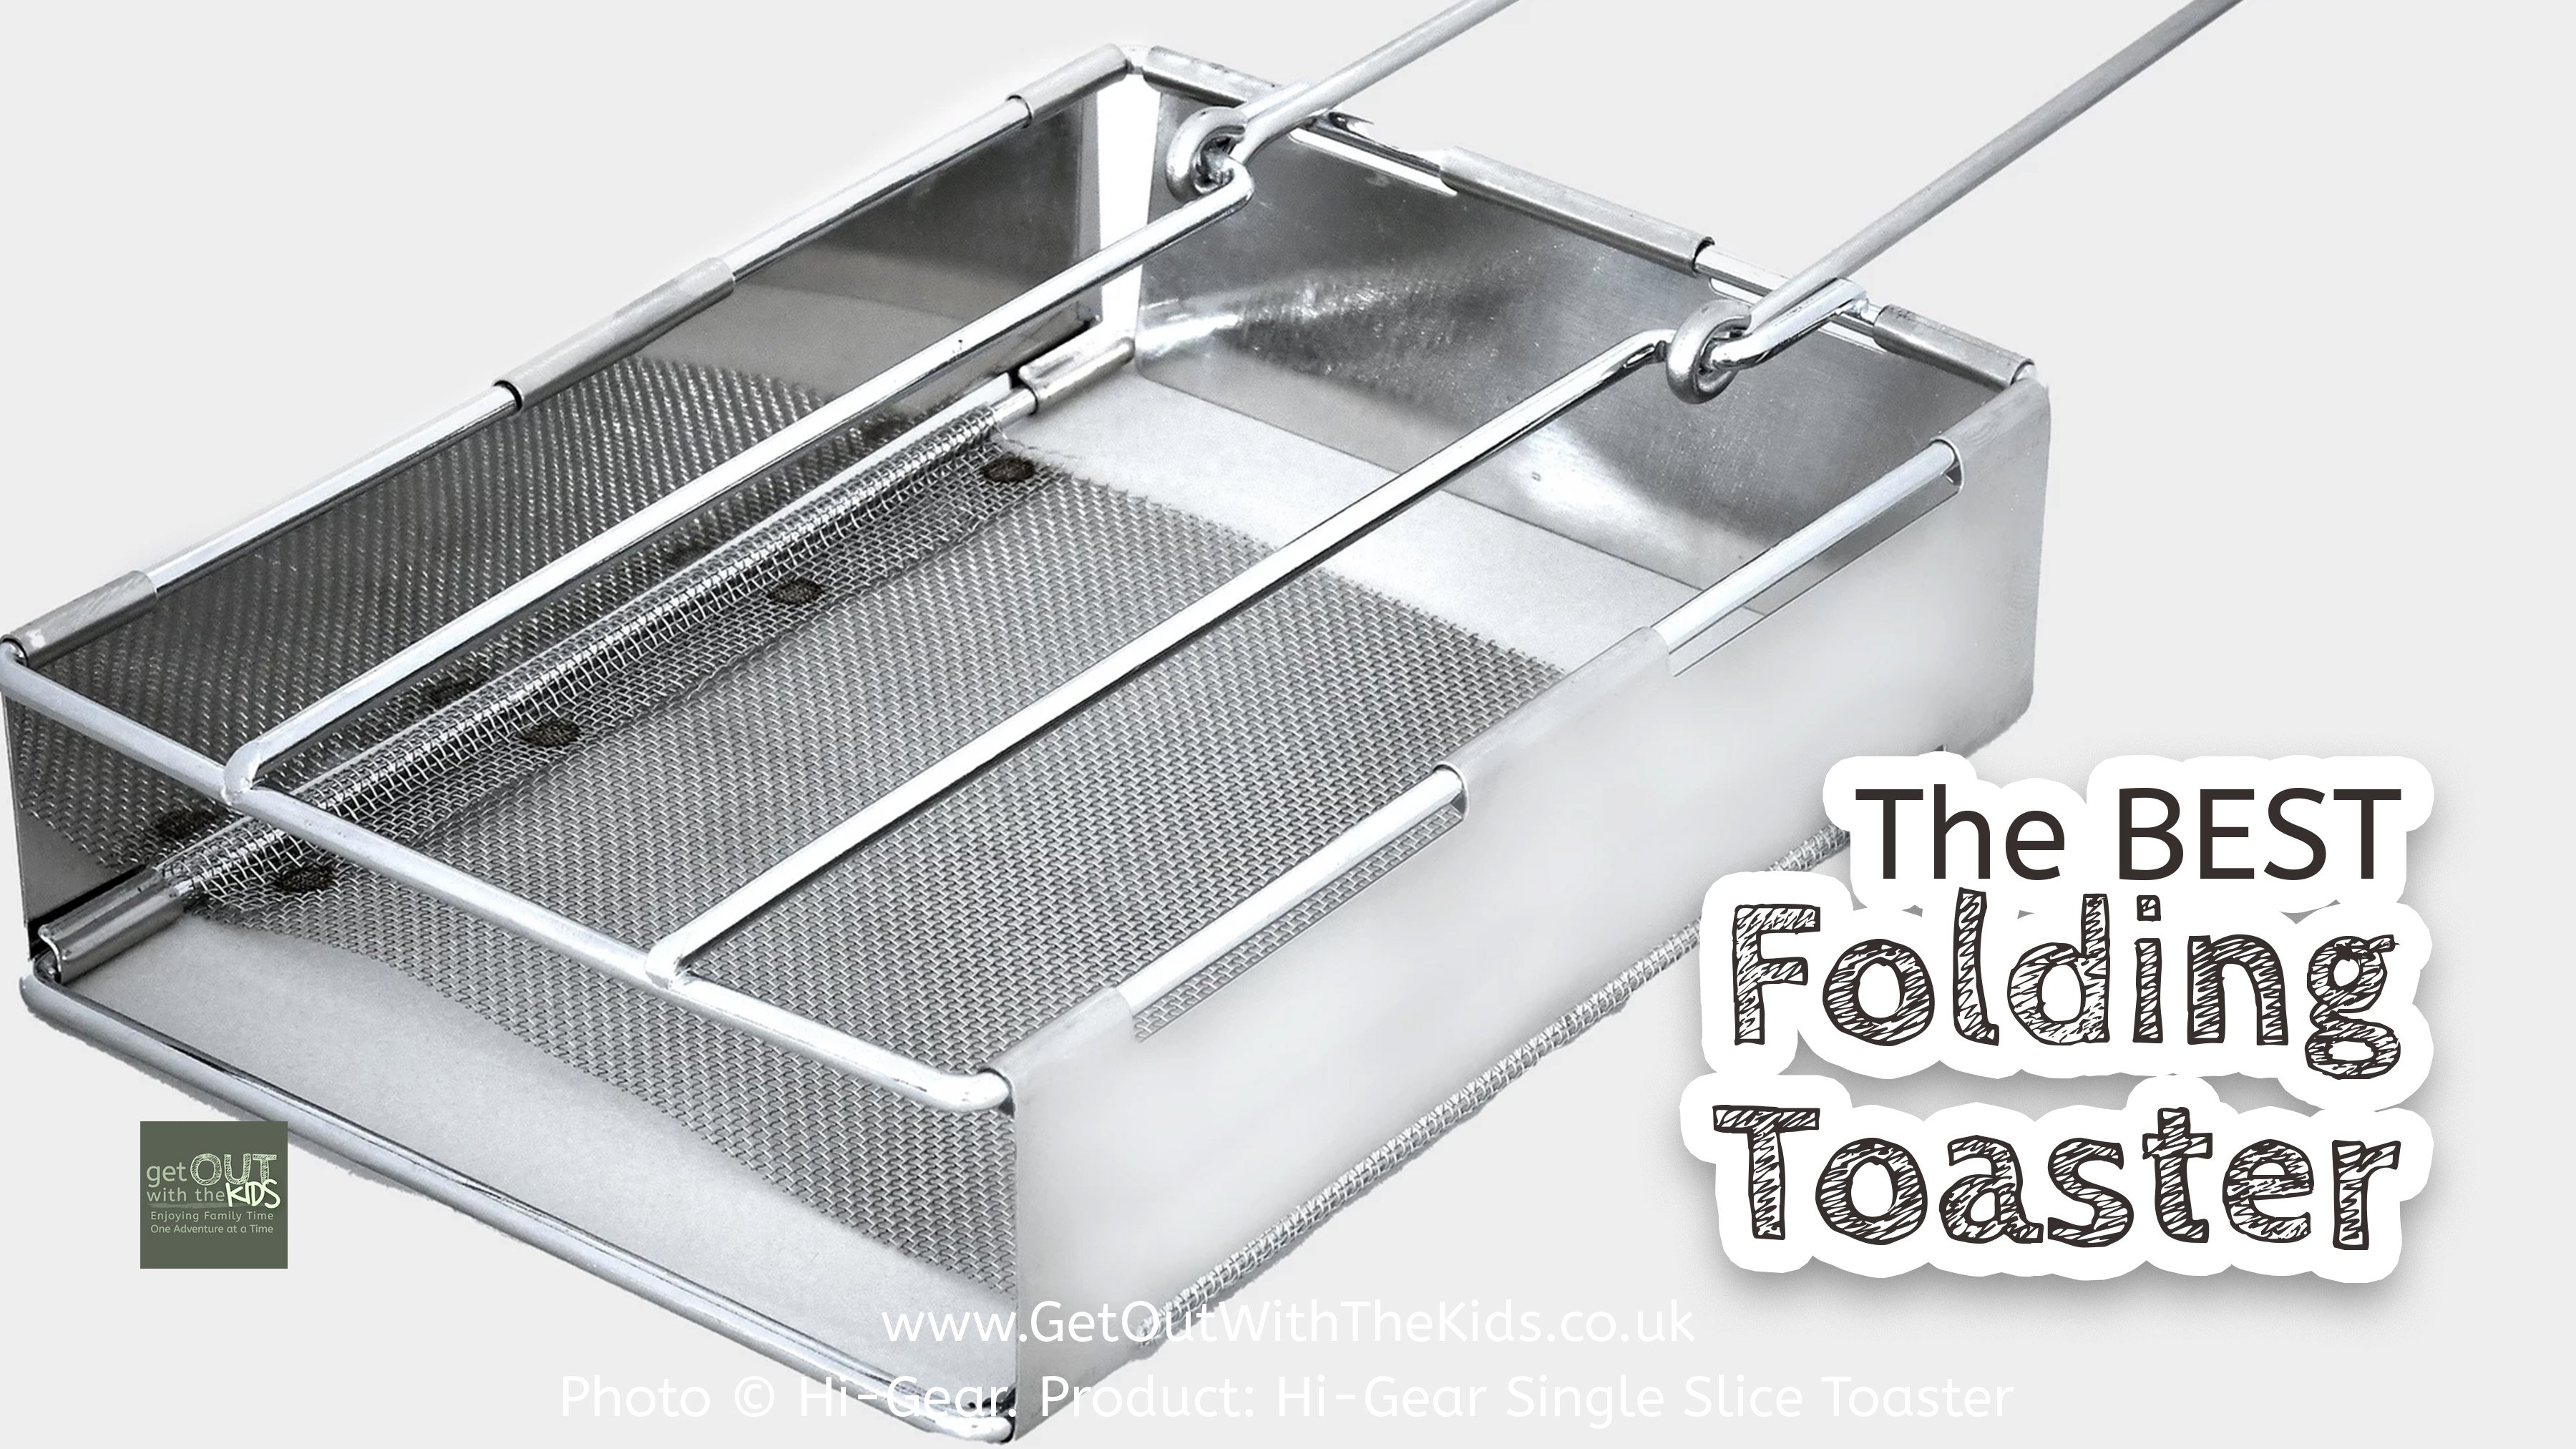 The folded toaster unfolded